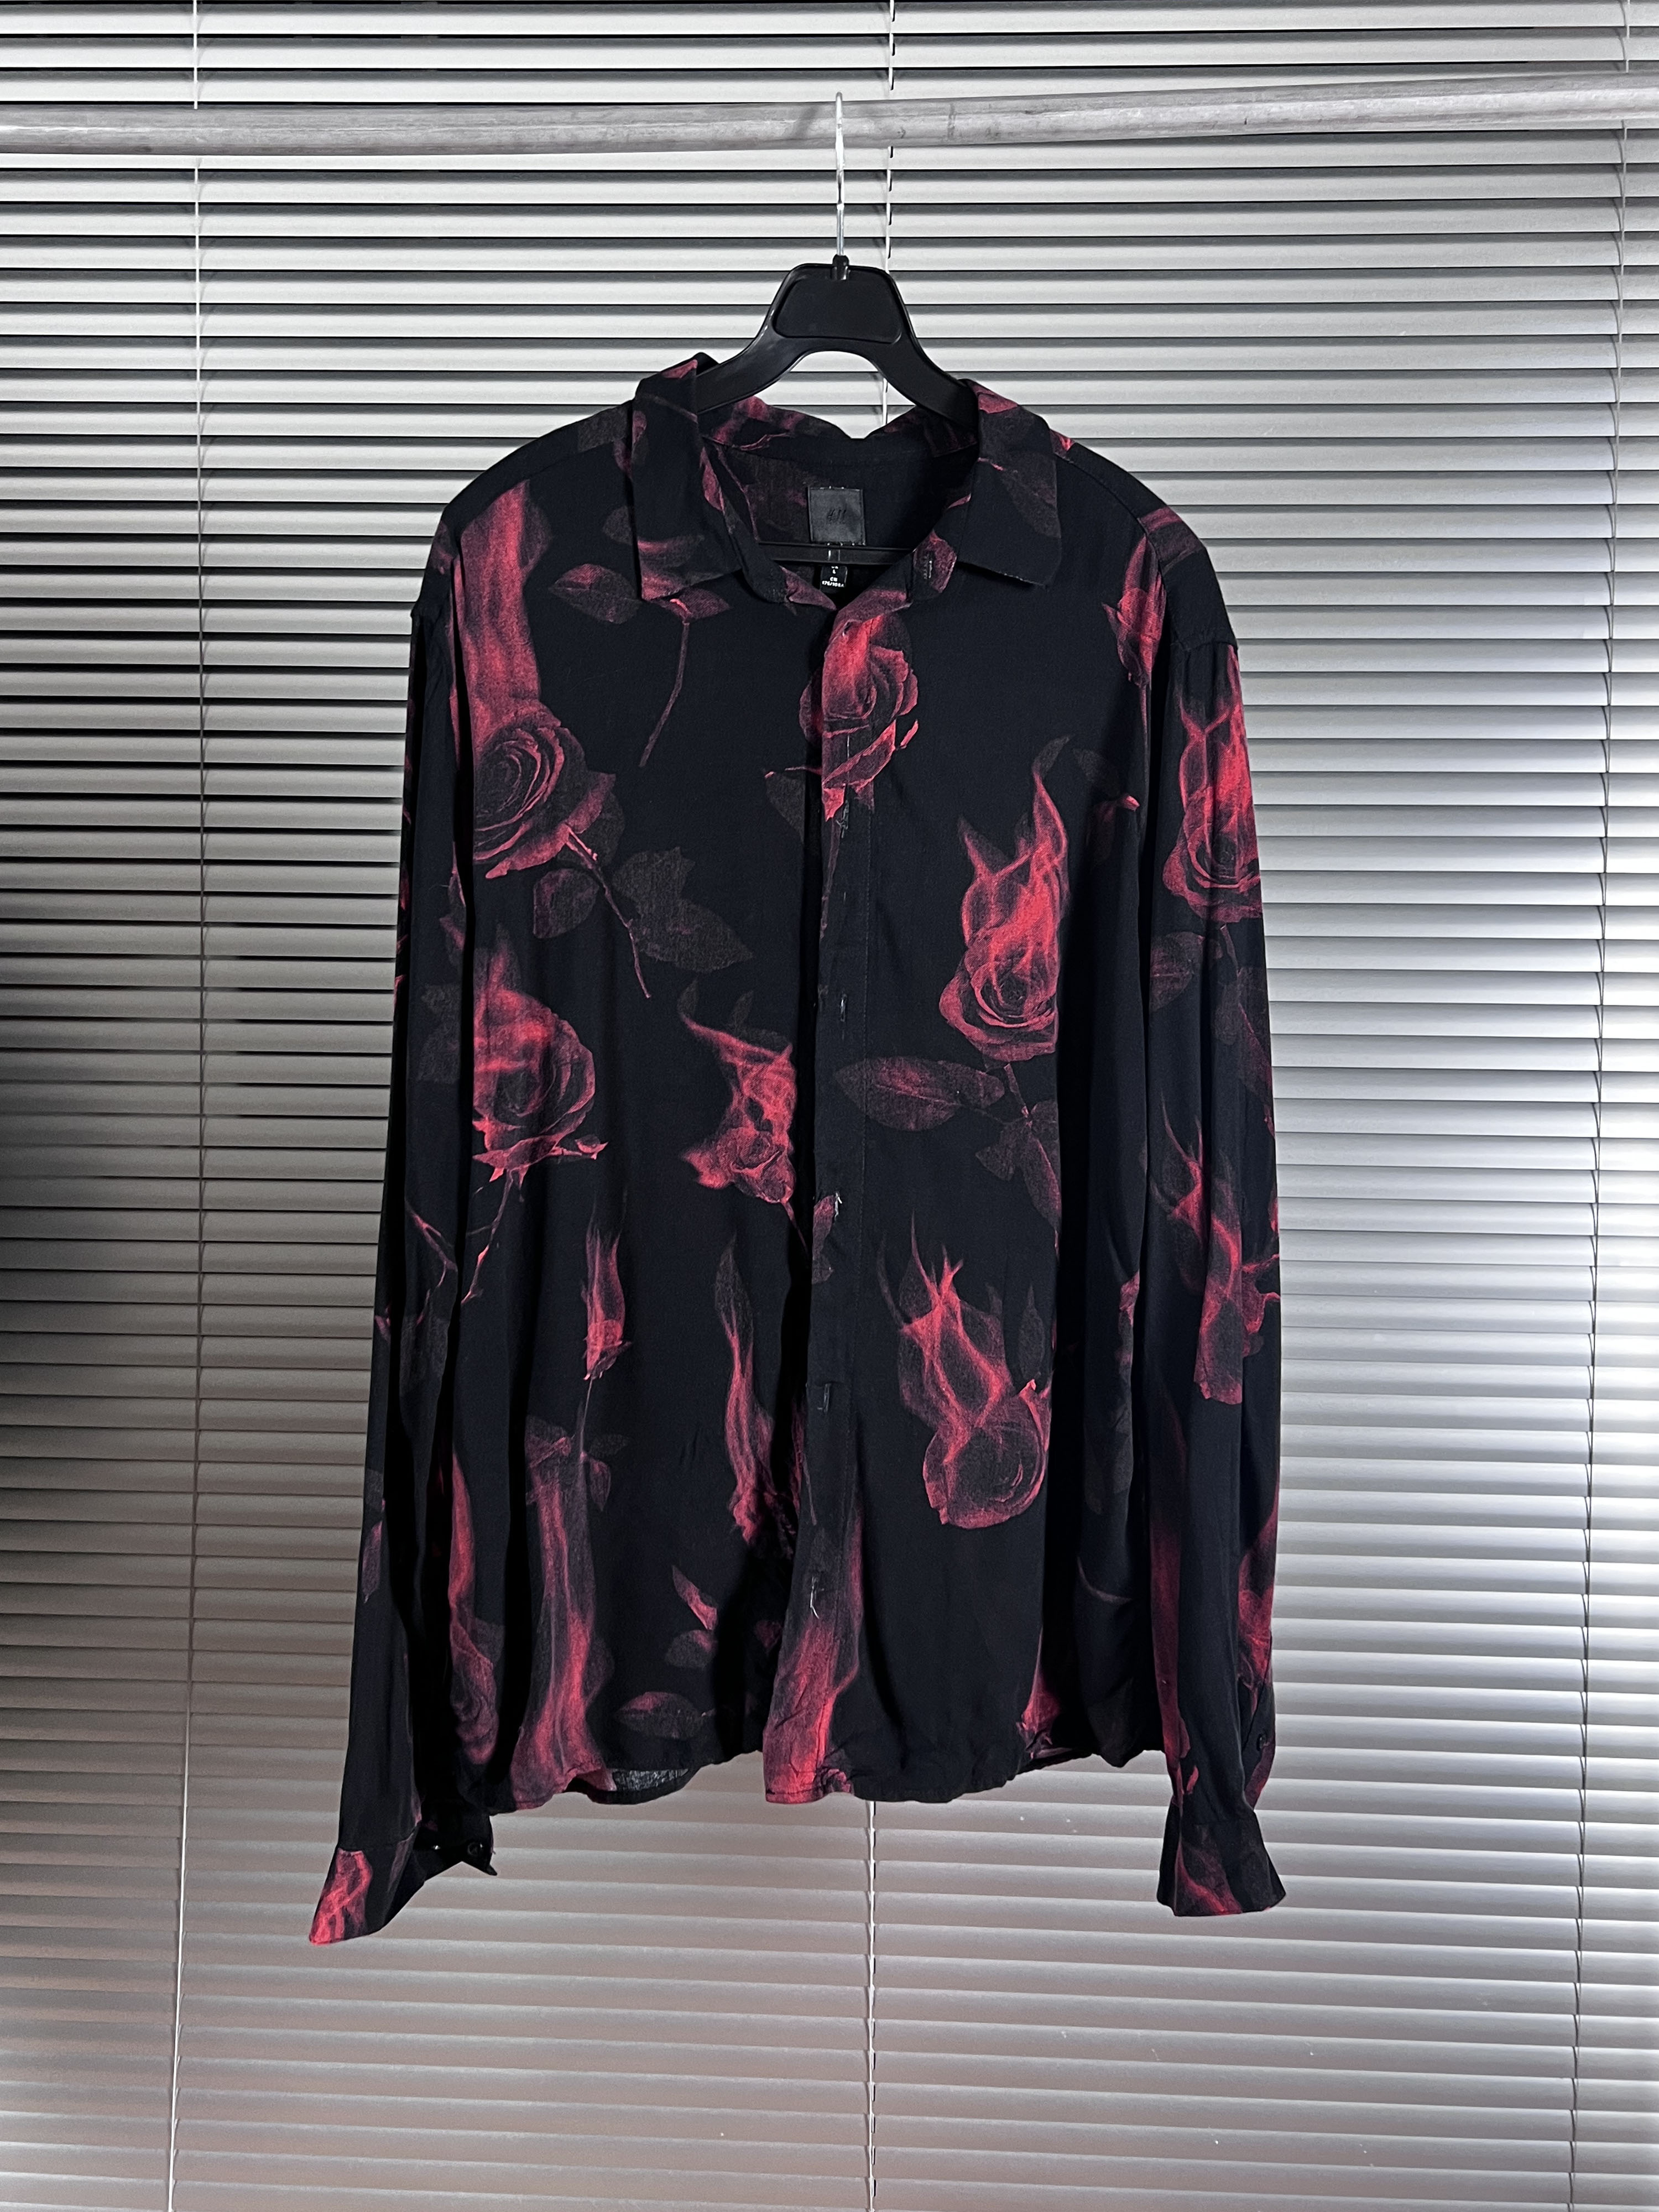 H&amp;m flame rose rayon shirts